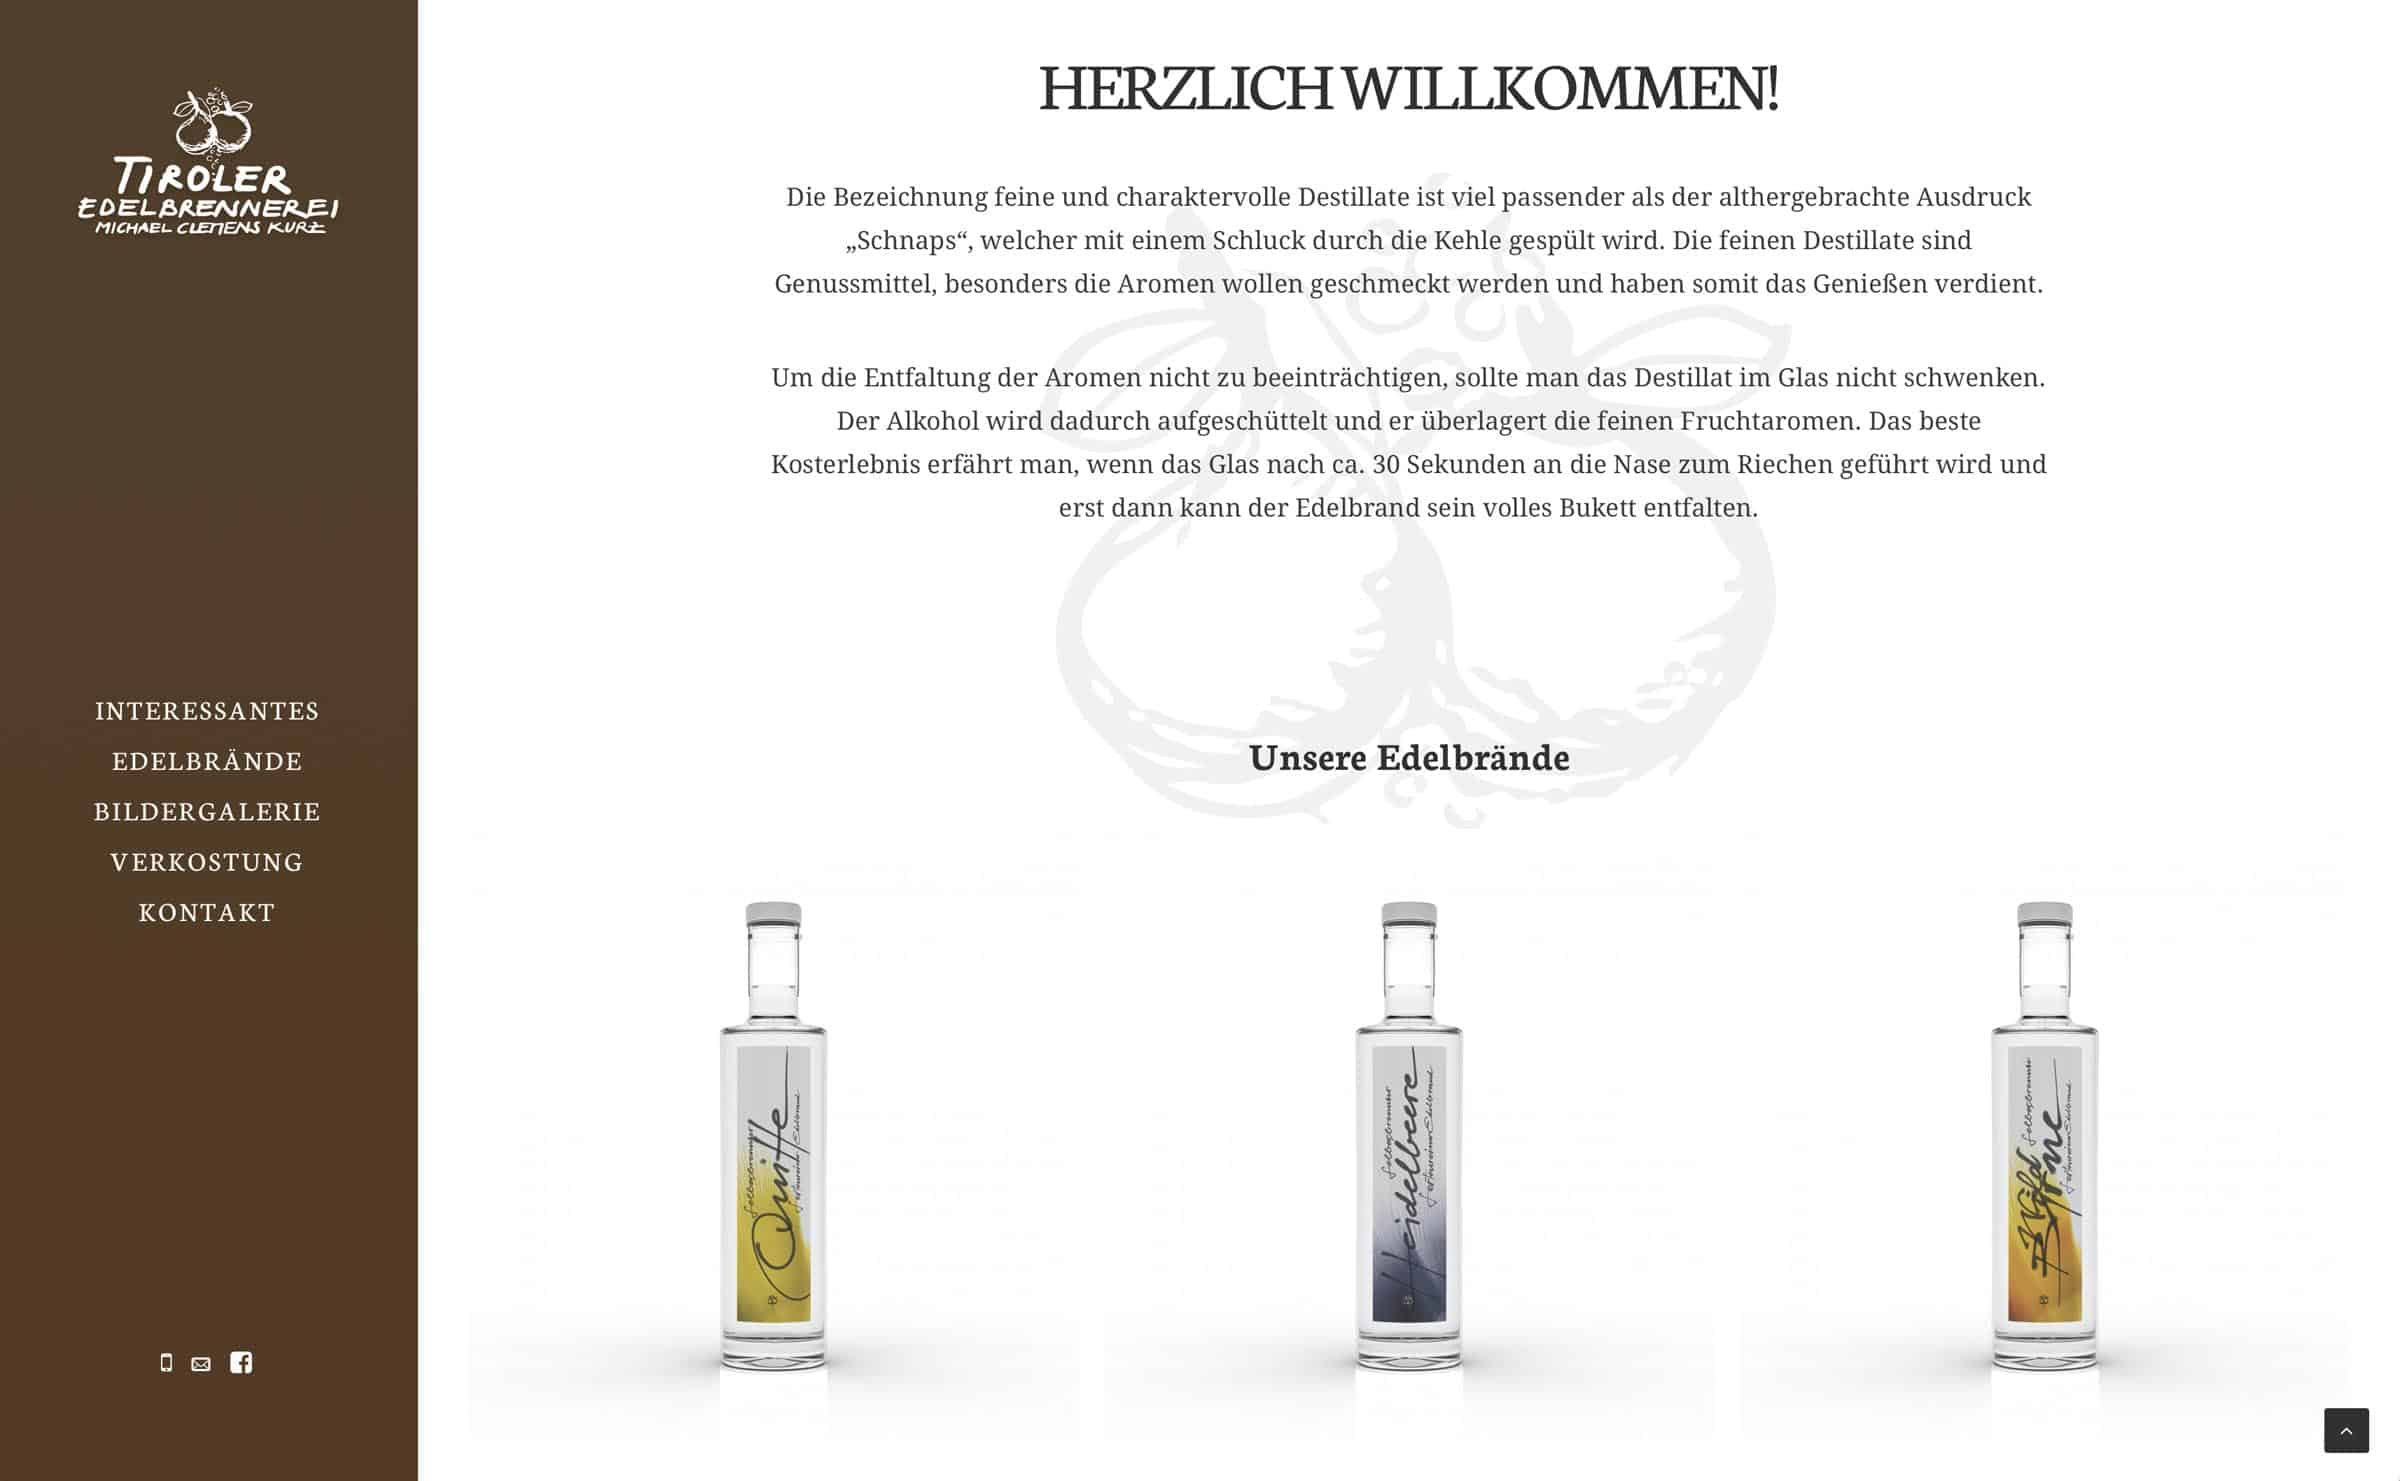 Webseite Webdesign Tiroler Edelbrennerei